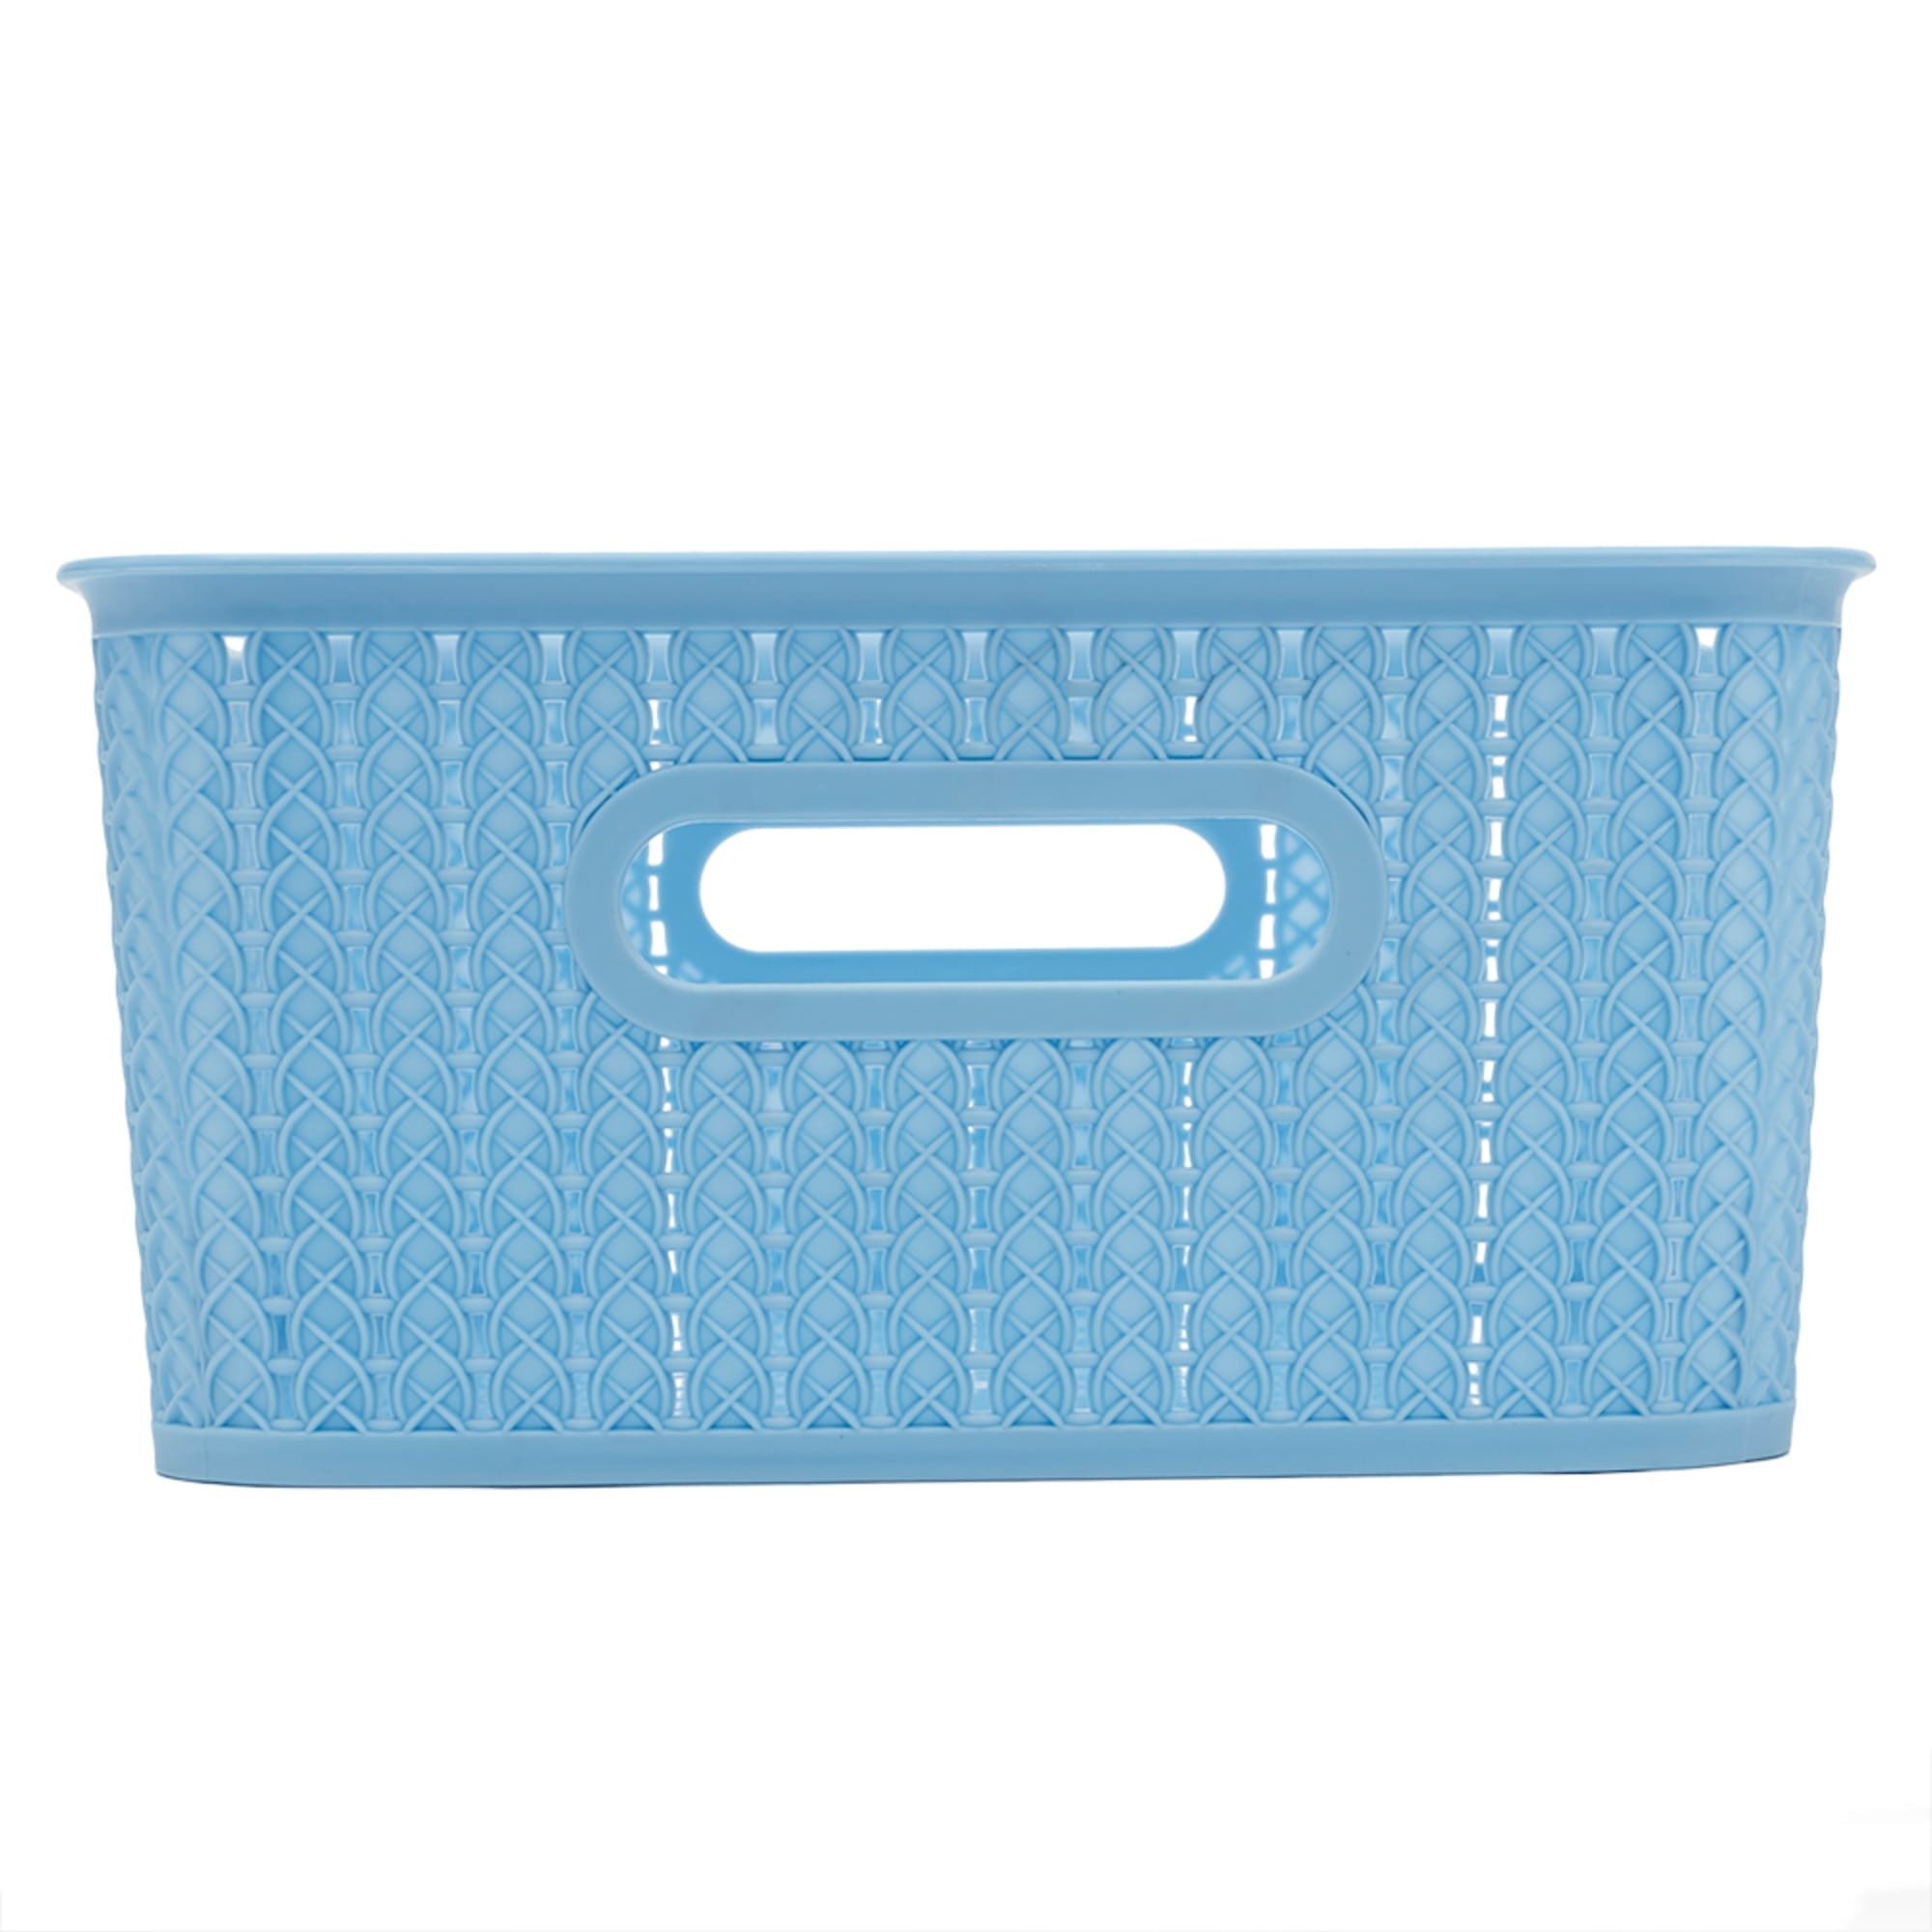 Home Basics 12.5 Liter Plastic Basket With Handles, Blue $5 EACH, CASE PACK OF 6